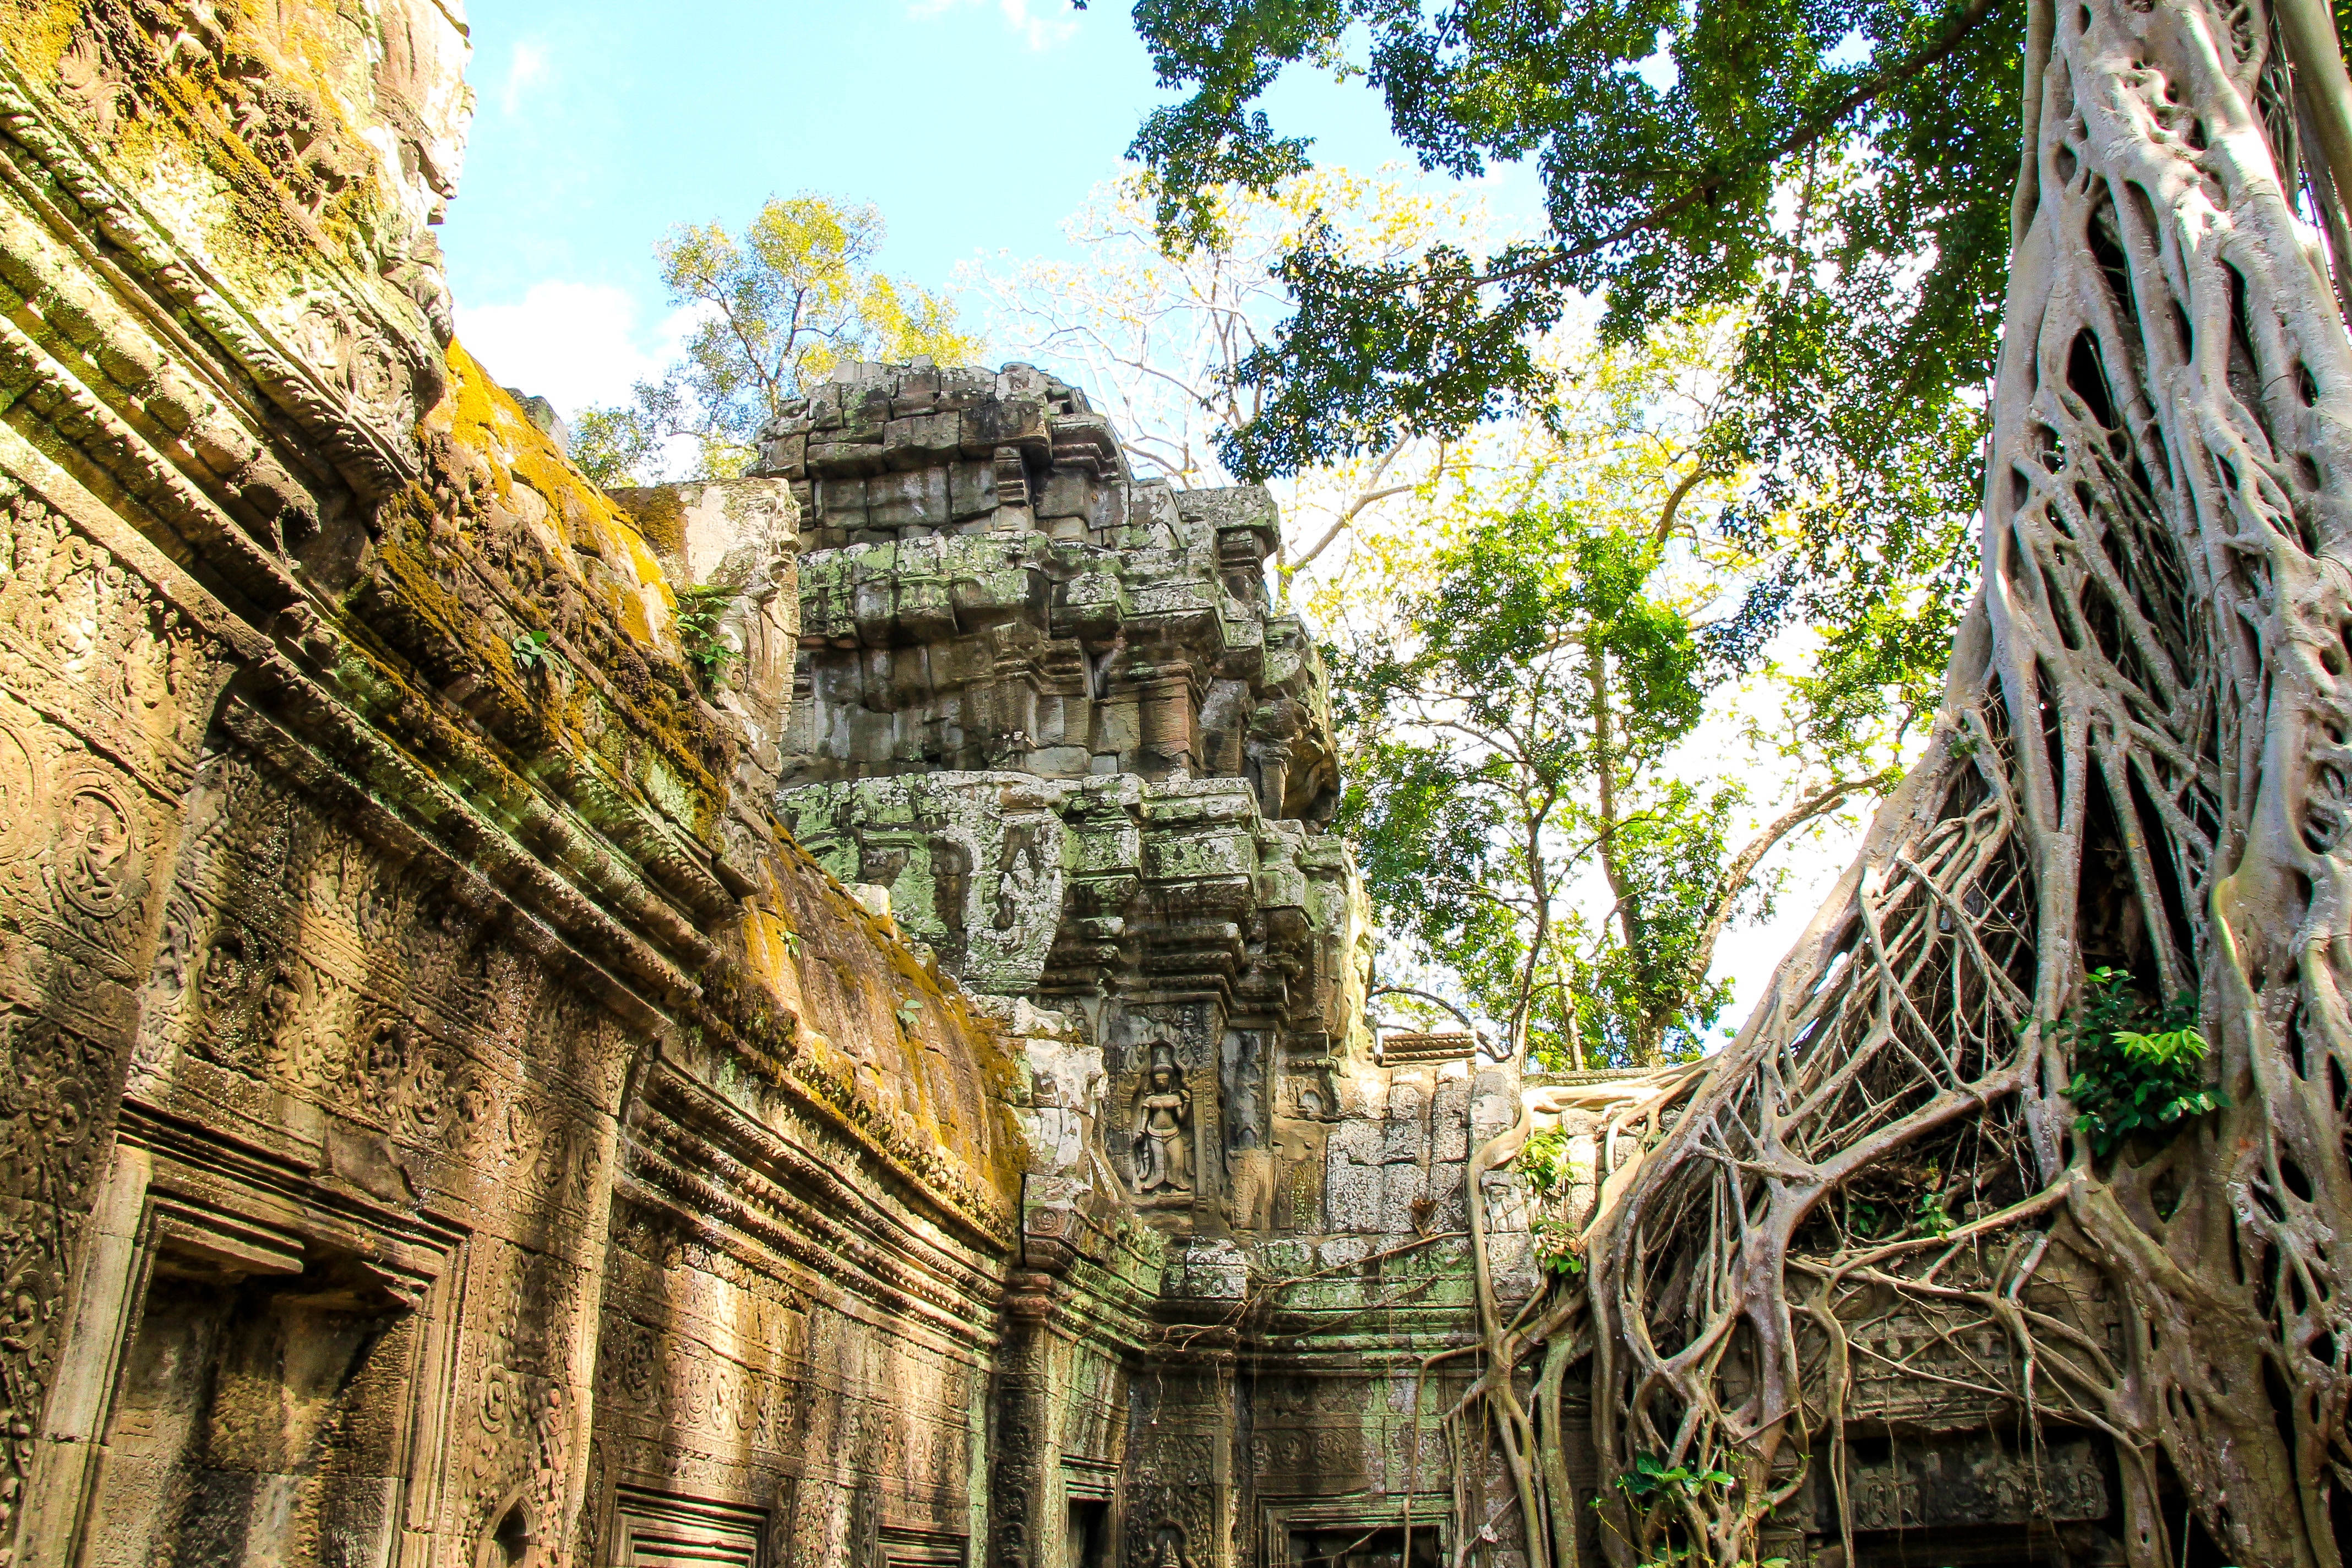 Angkor -Ta Prohm temple